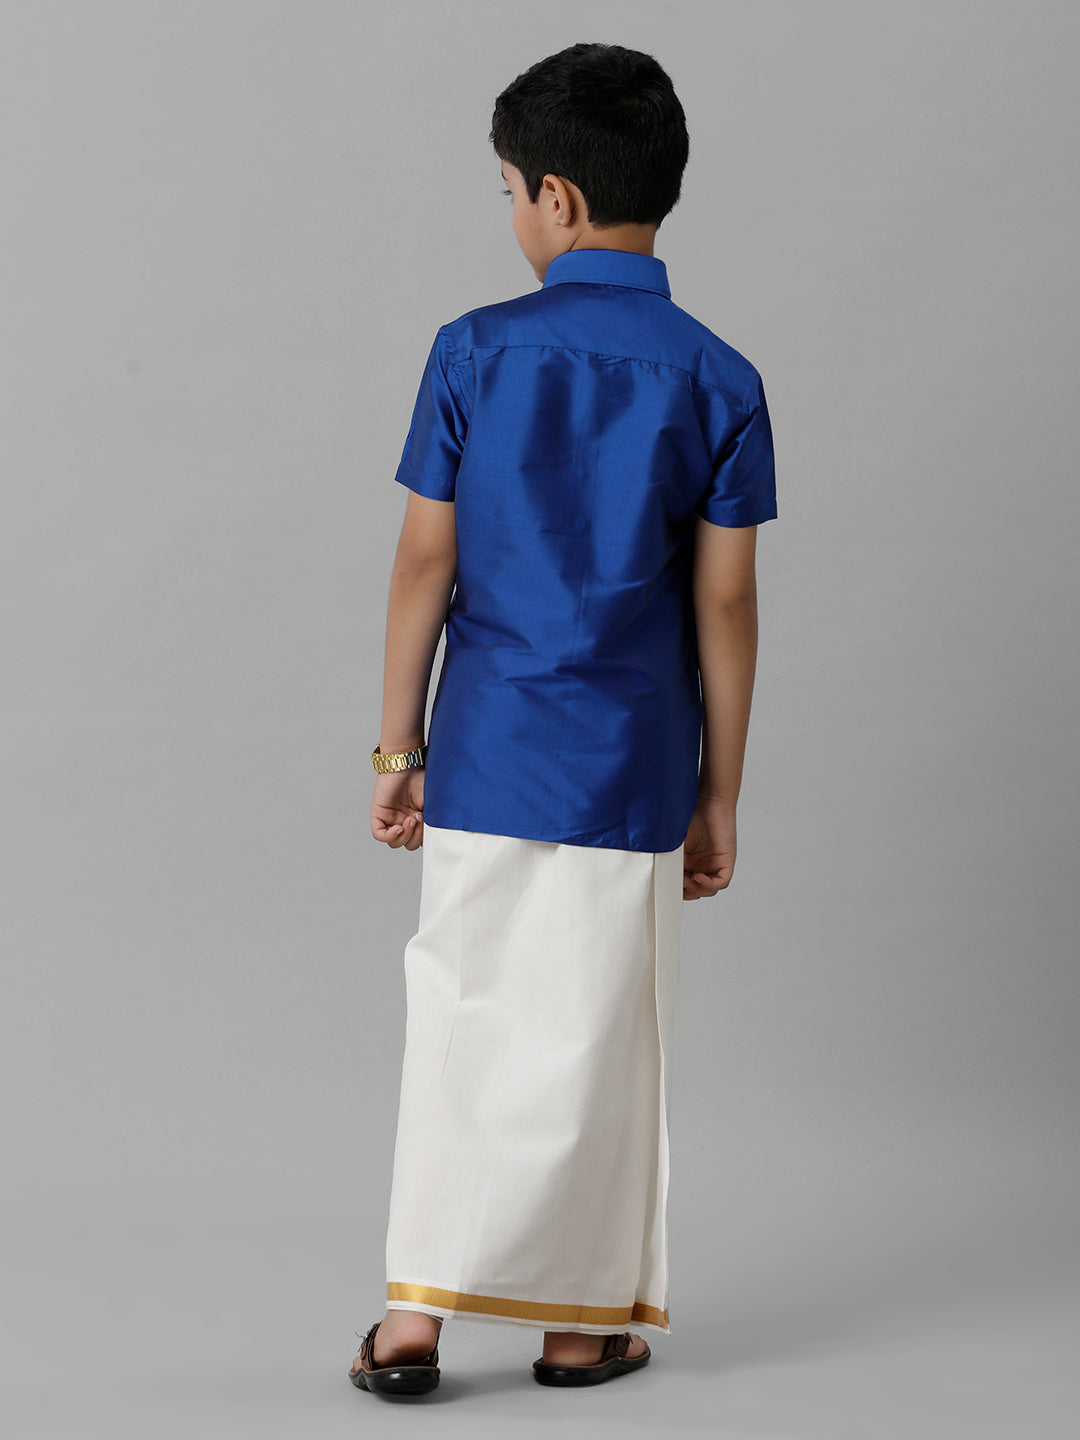 Boys Silk Cotton Light Blue Half Sleeves Shirt with Adjustable Cream Dhoti Combo K5-Back view